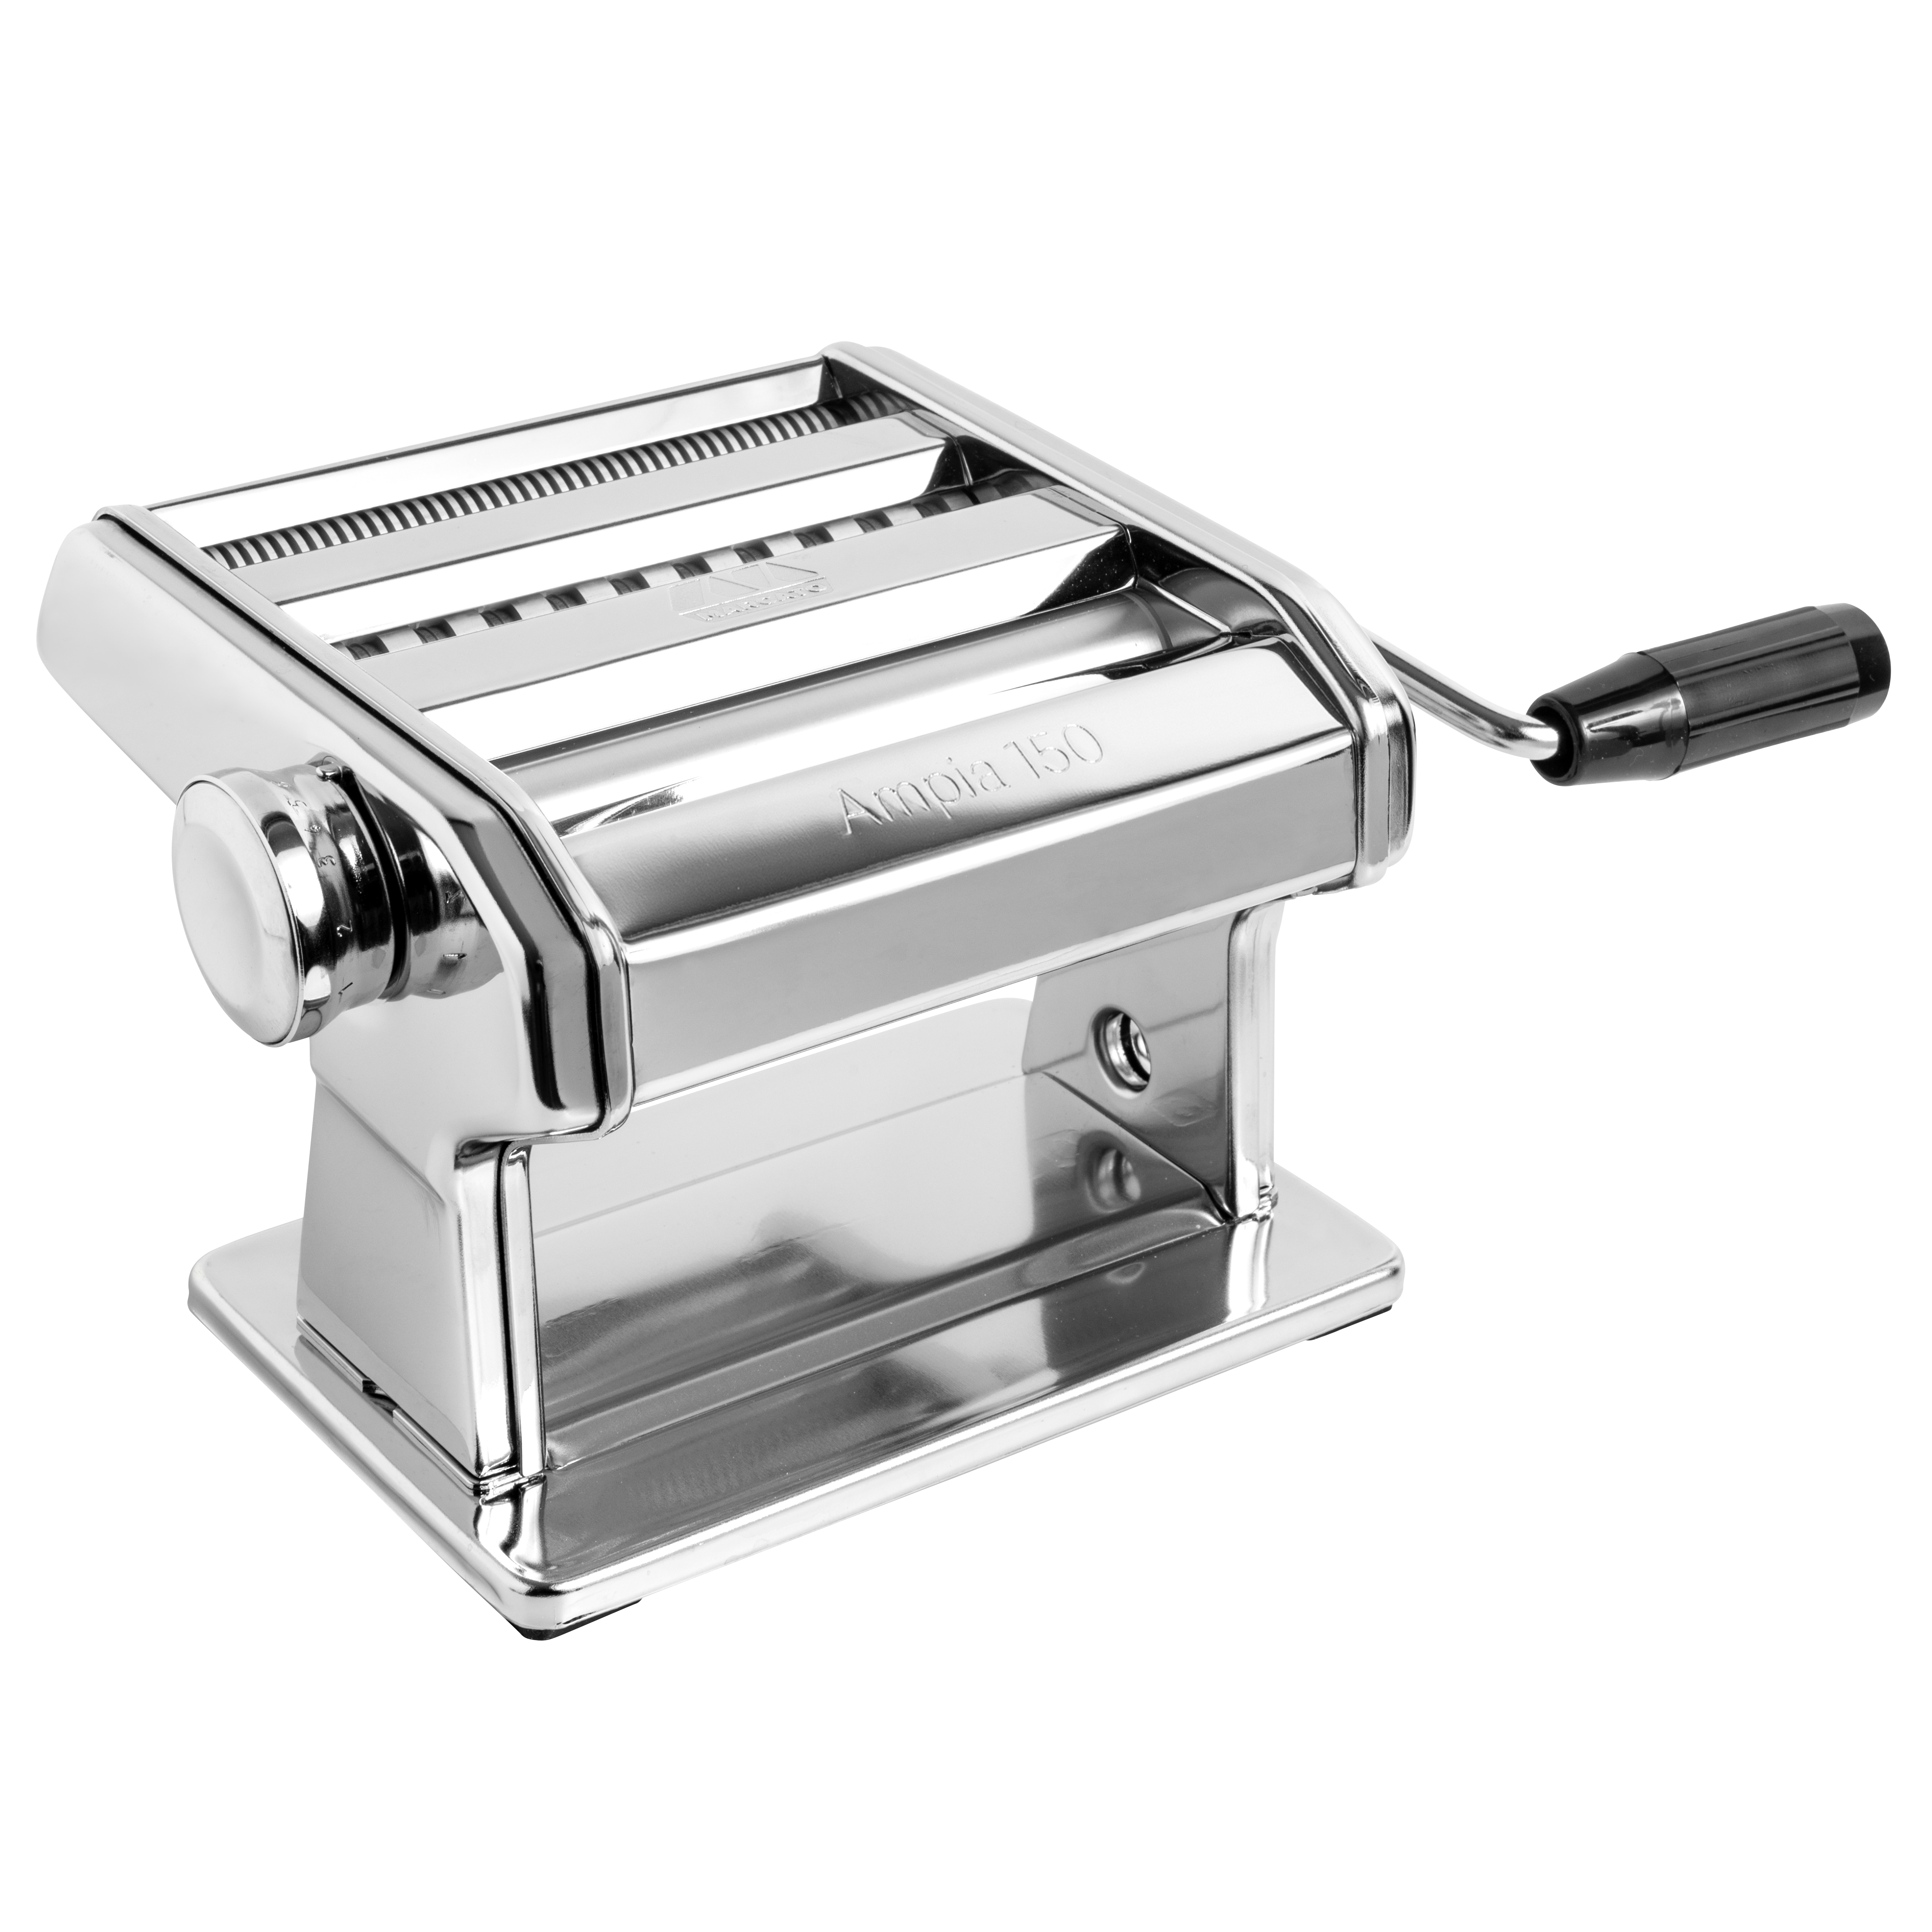 Marcato Ampia Classic 150 Pasta Machine